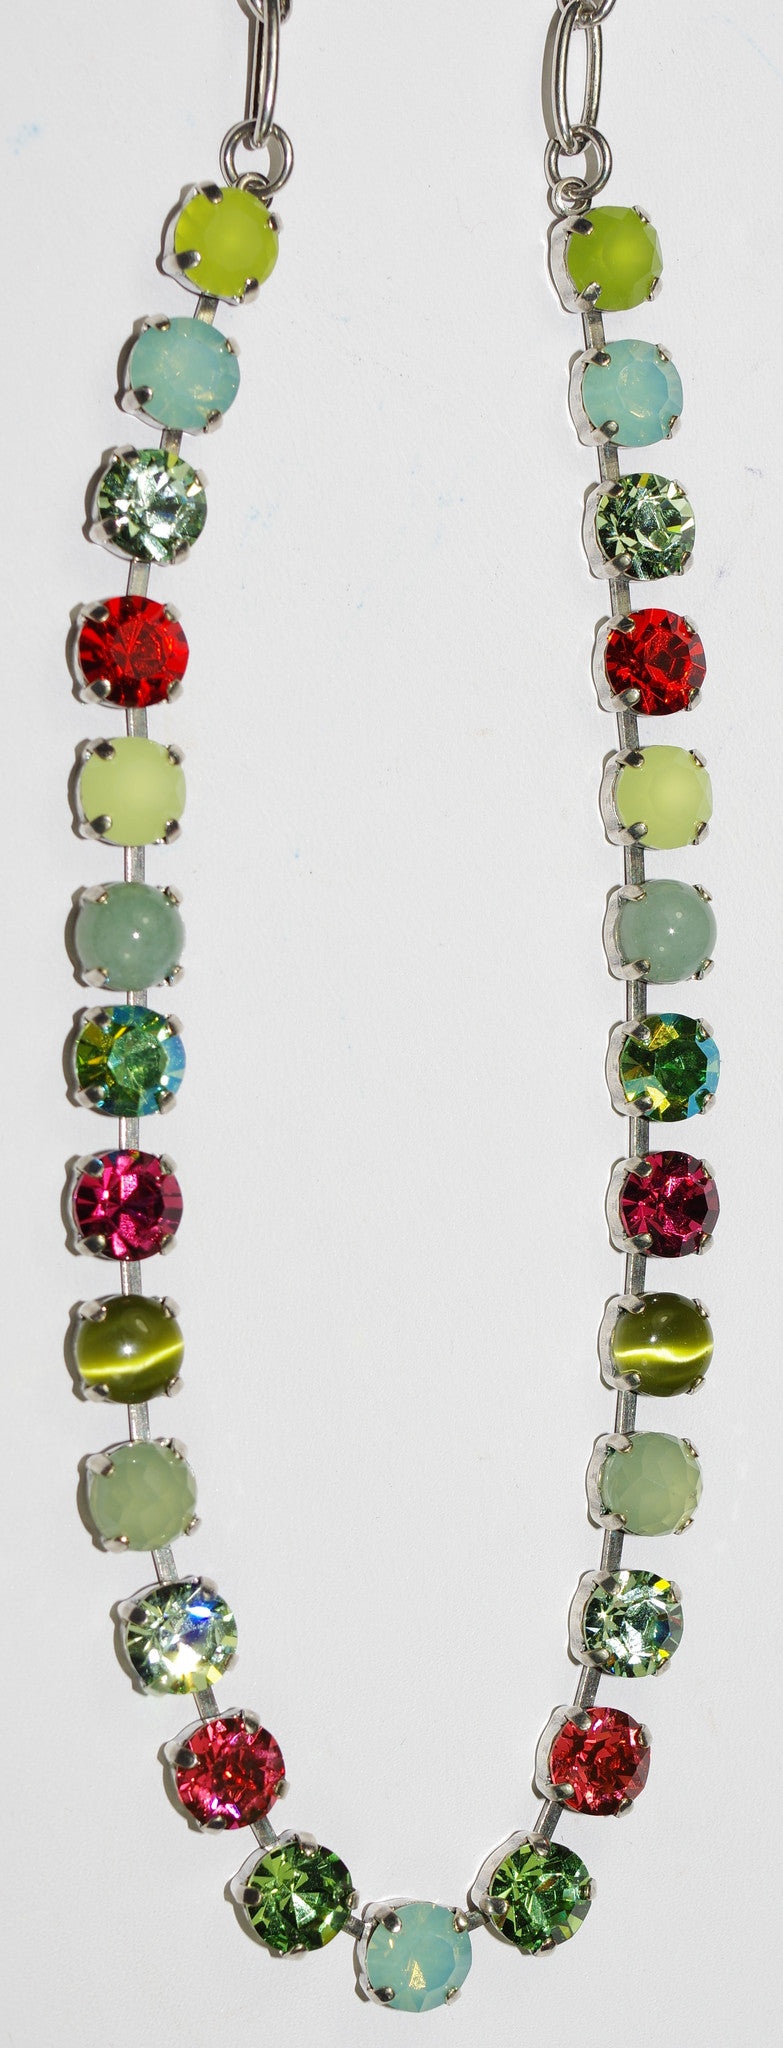 MARIANA NECKLACE BETTE MYRRH: pacific opal, orange, stones in silver setting, 17" adjustable chain